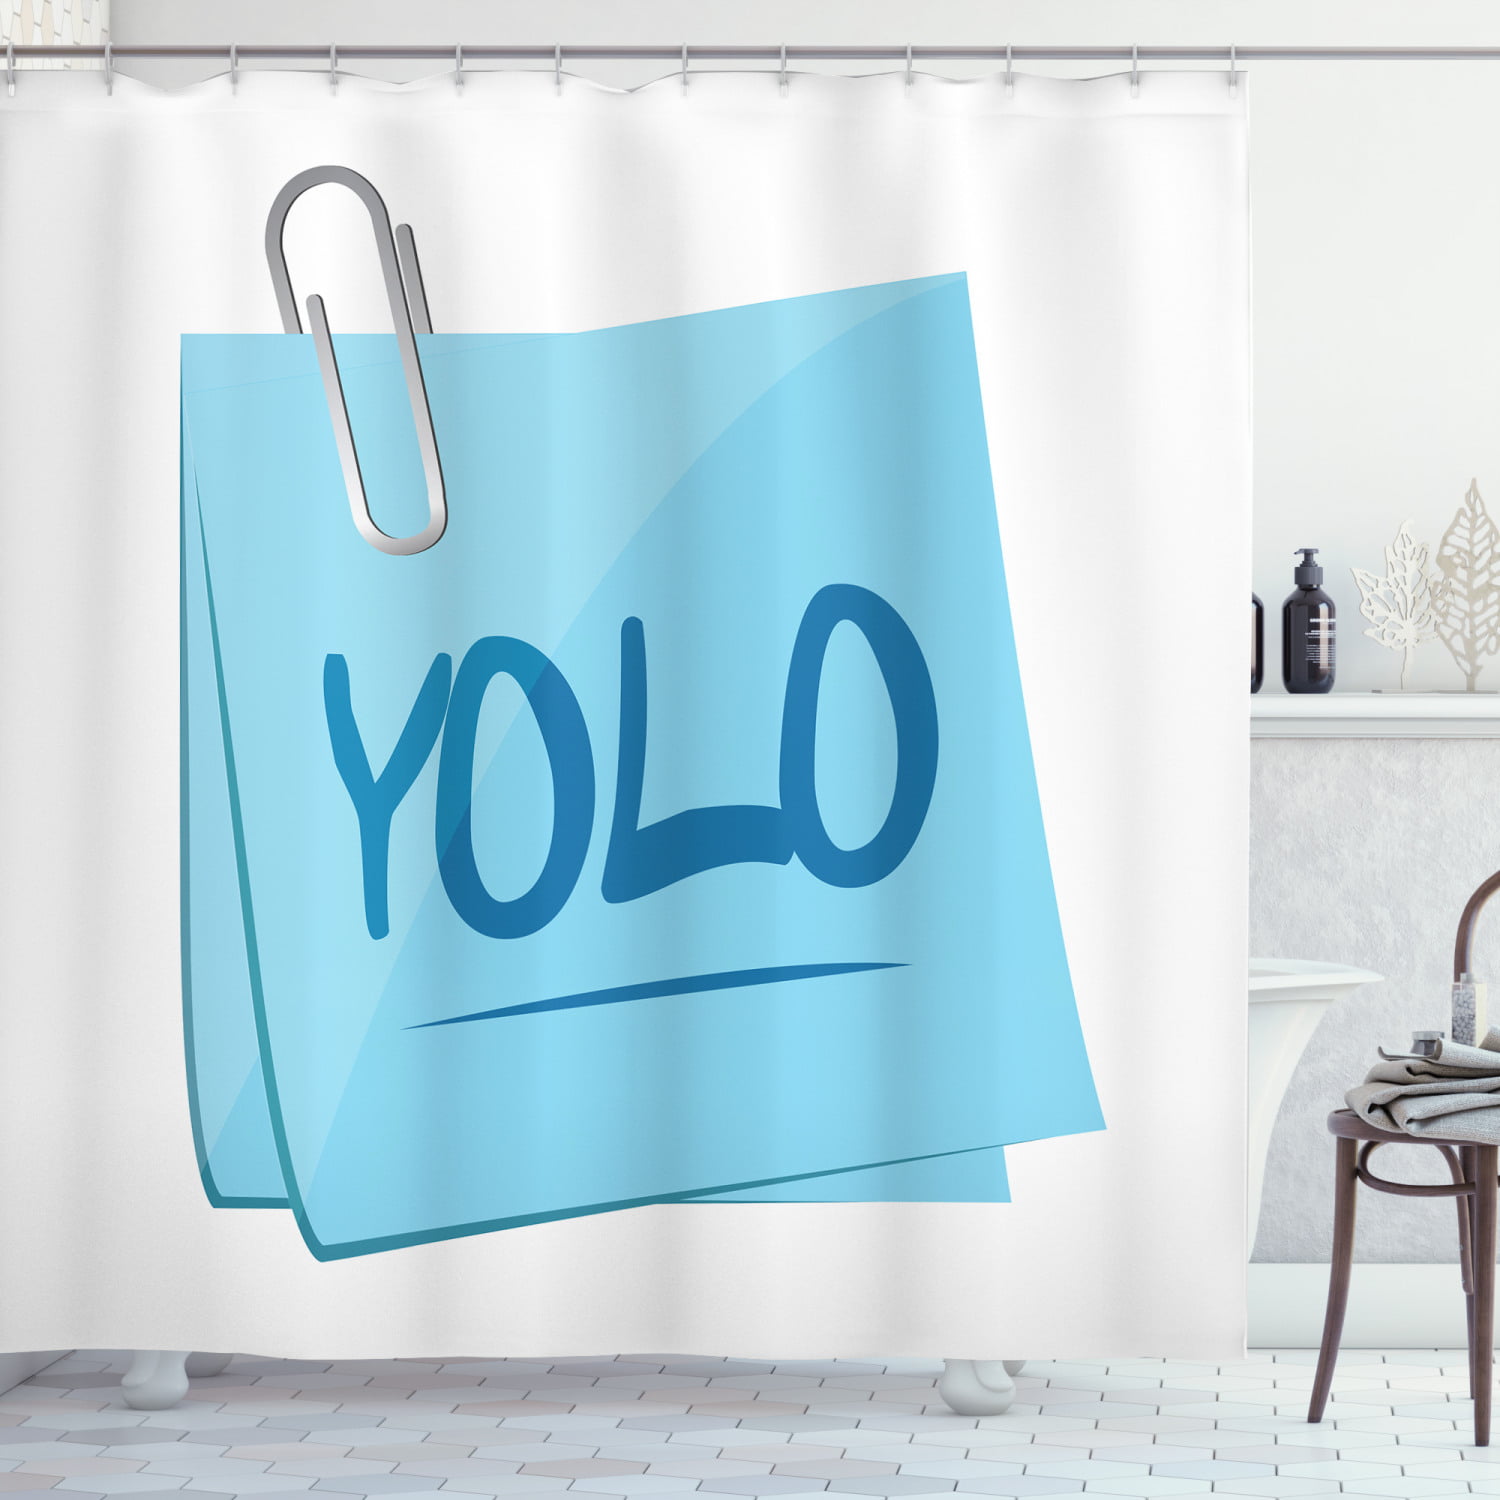 Yolo Shower Curtain Fabric Bathroom Decor Set with Hooks 4 Sizes